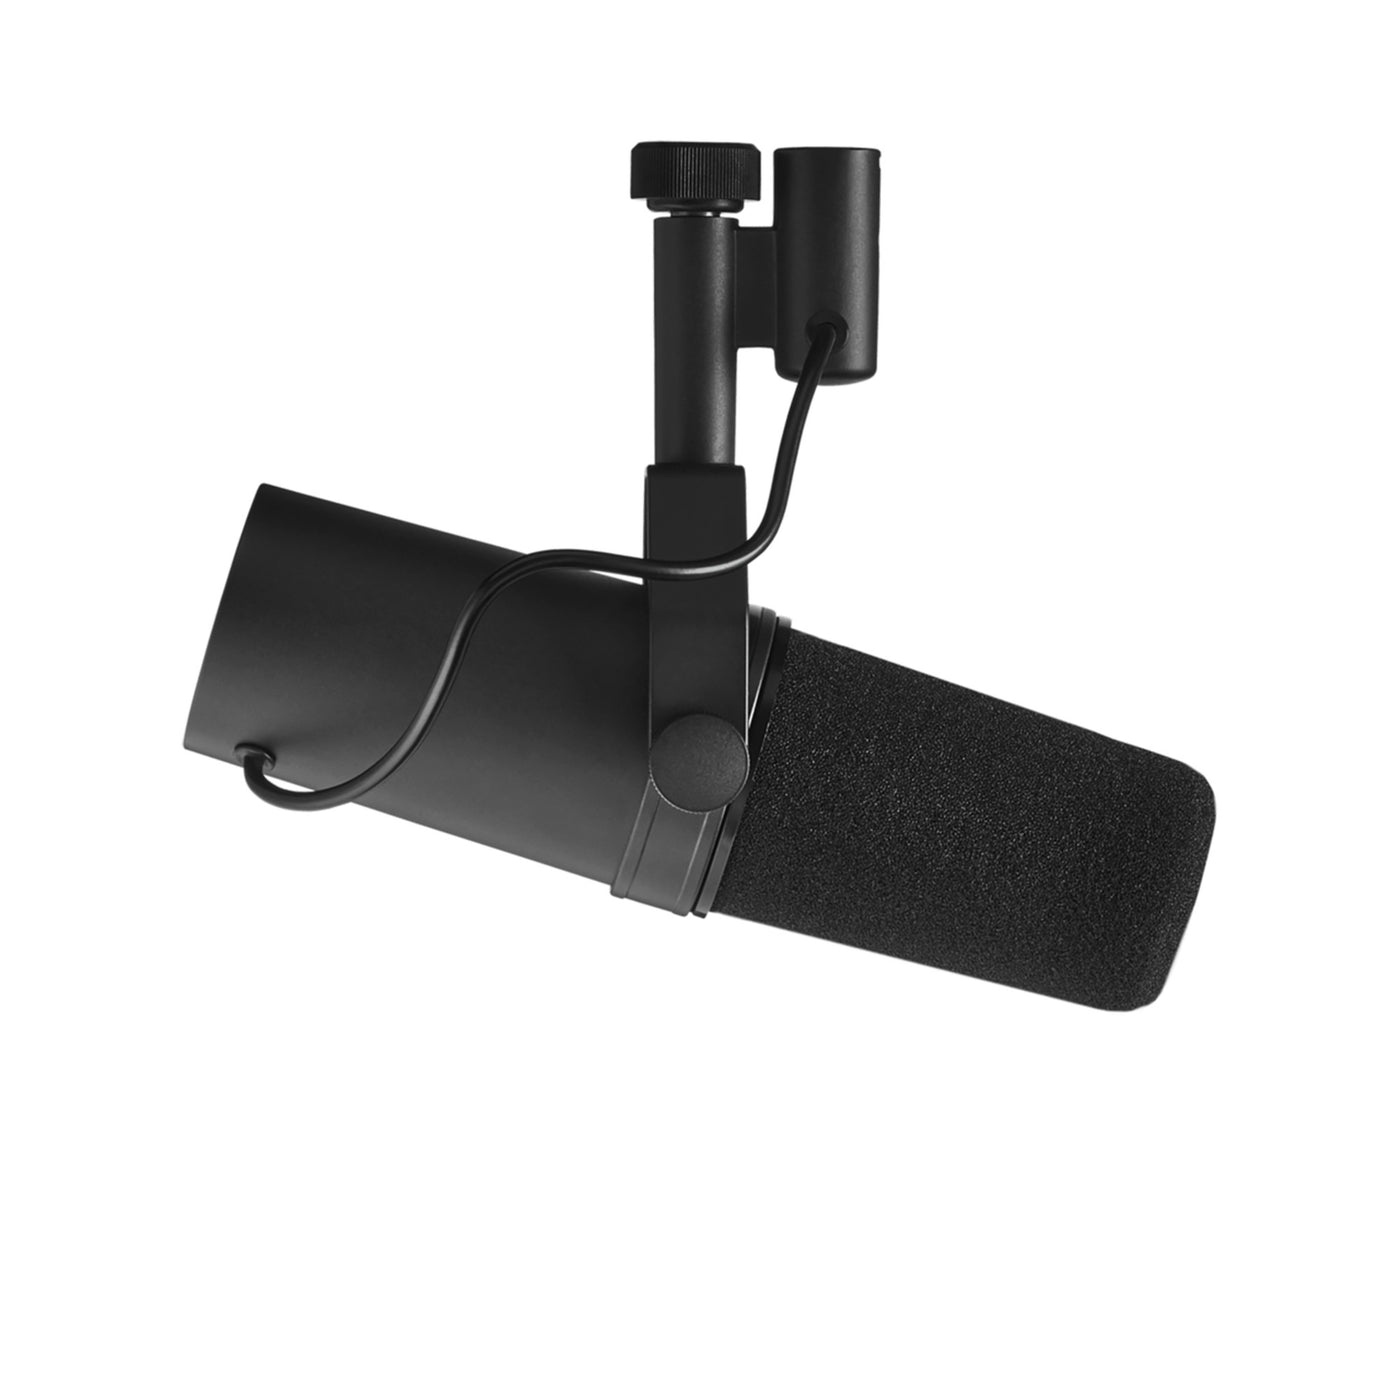 Shure SM7B Cardioid Dynamic Studio Vocal Microphone, includes standard and close-talk windscreens